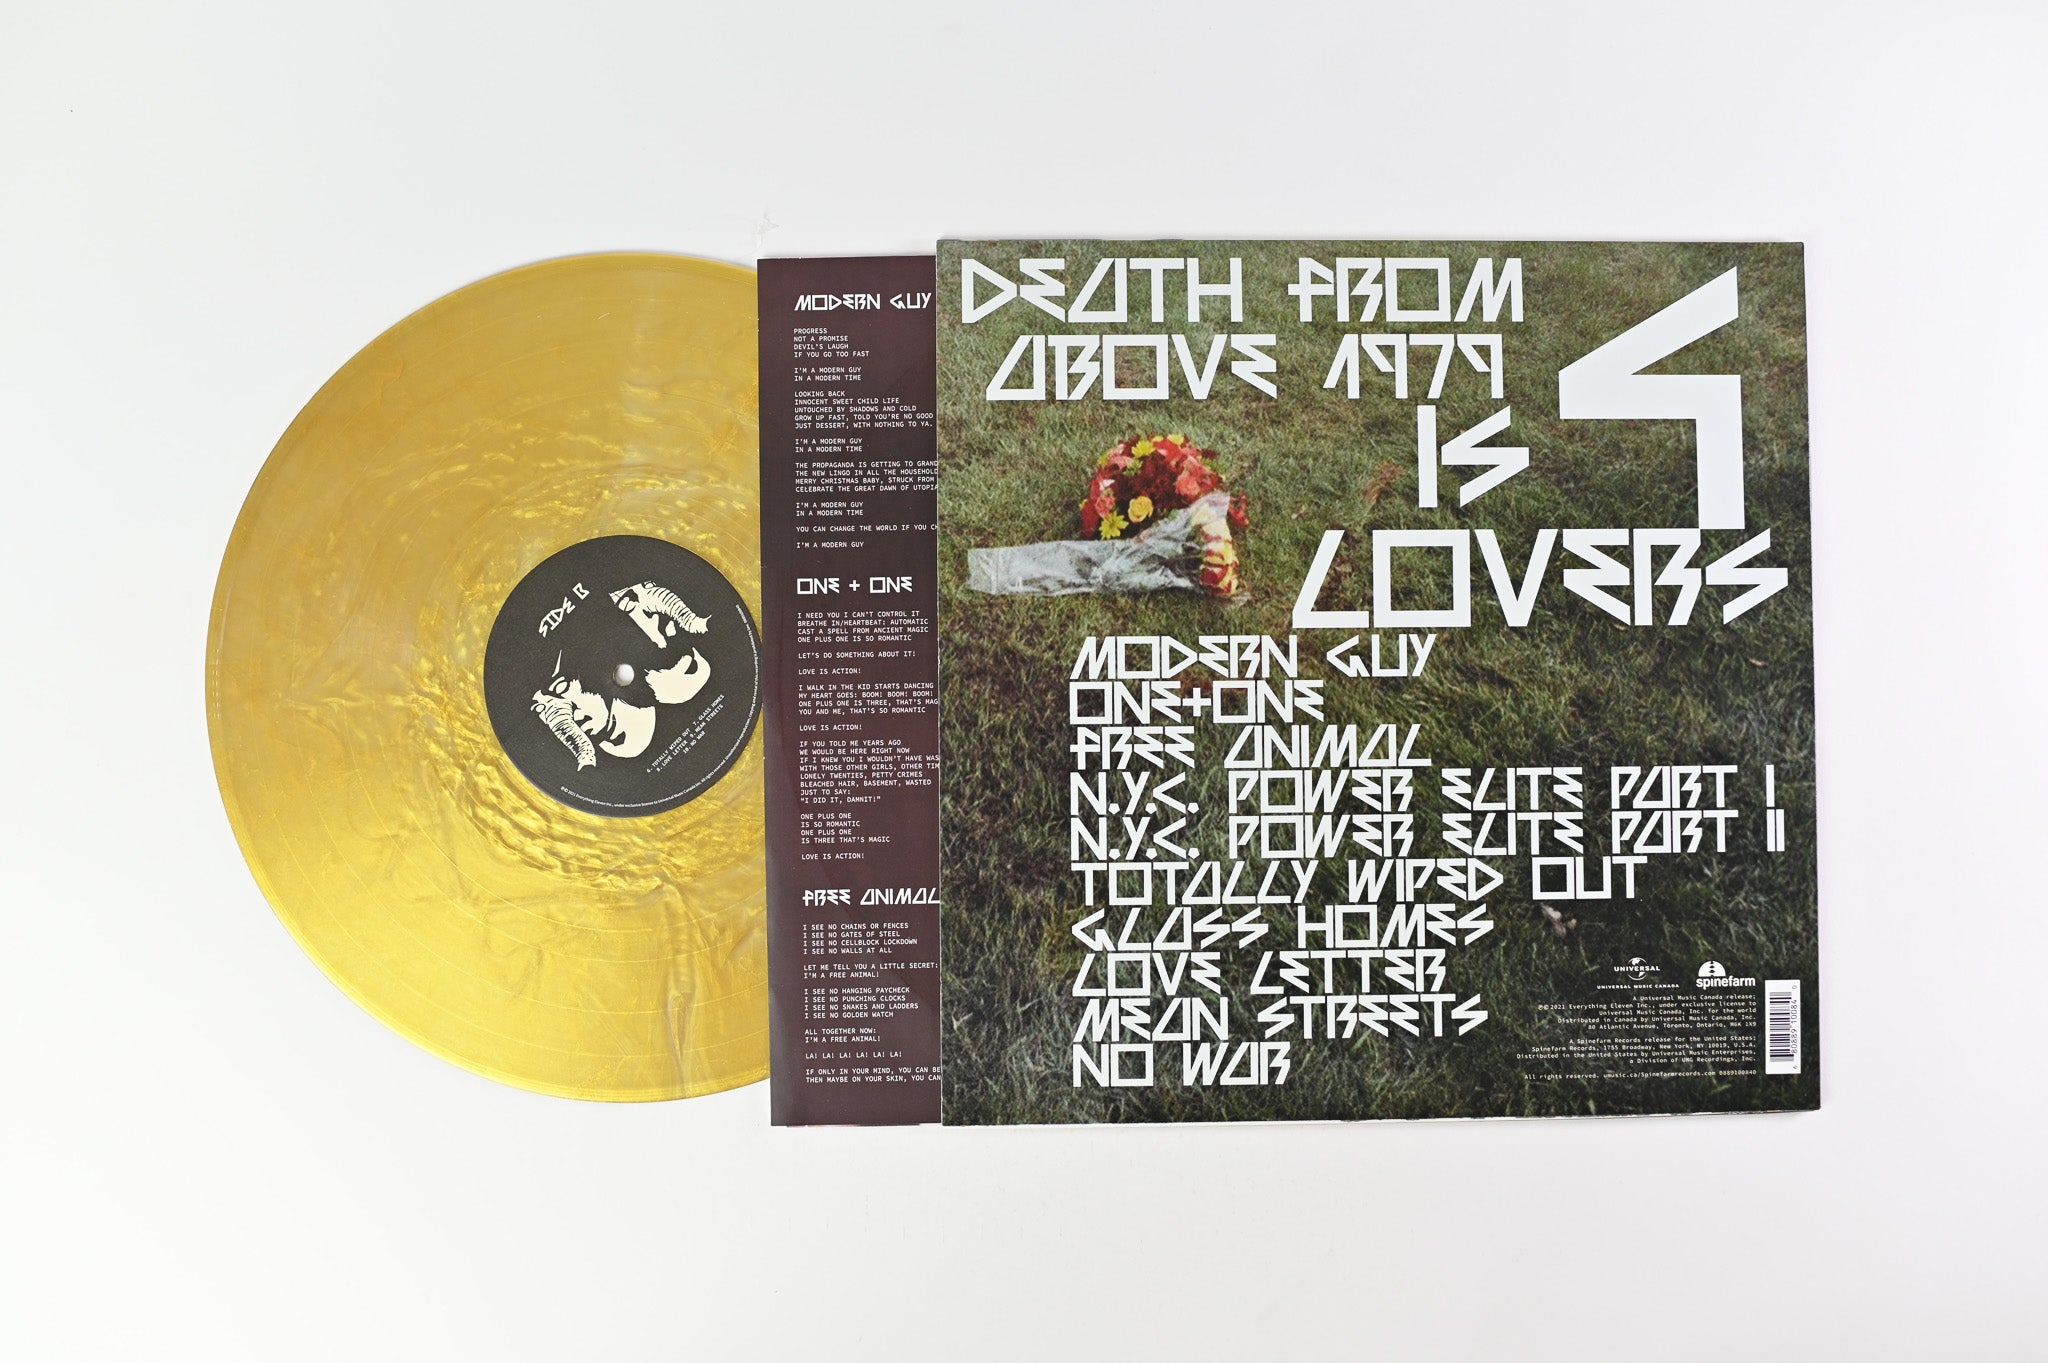 Death From Above 1979 - Is 4 Lovers on Spinefarm Ltd Gold Vinyl